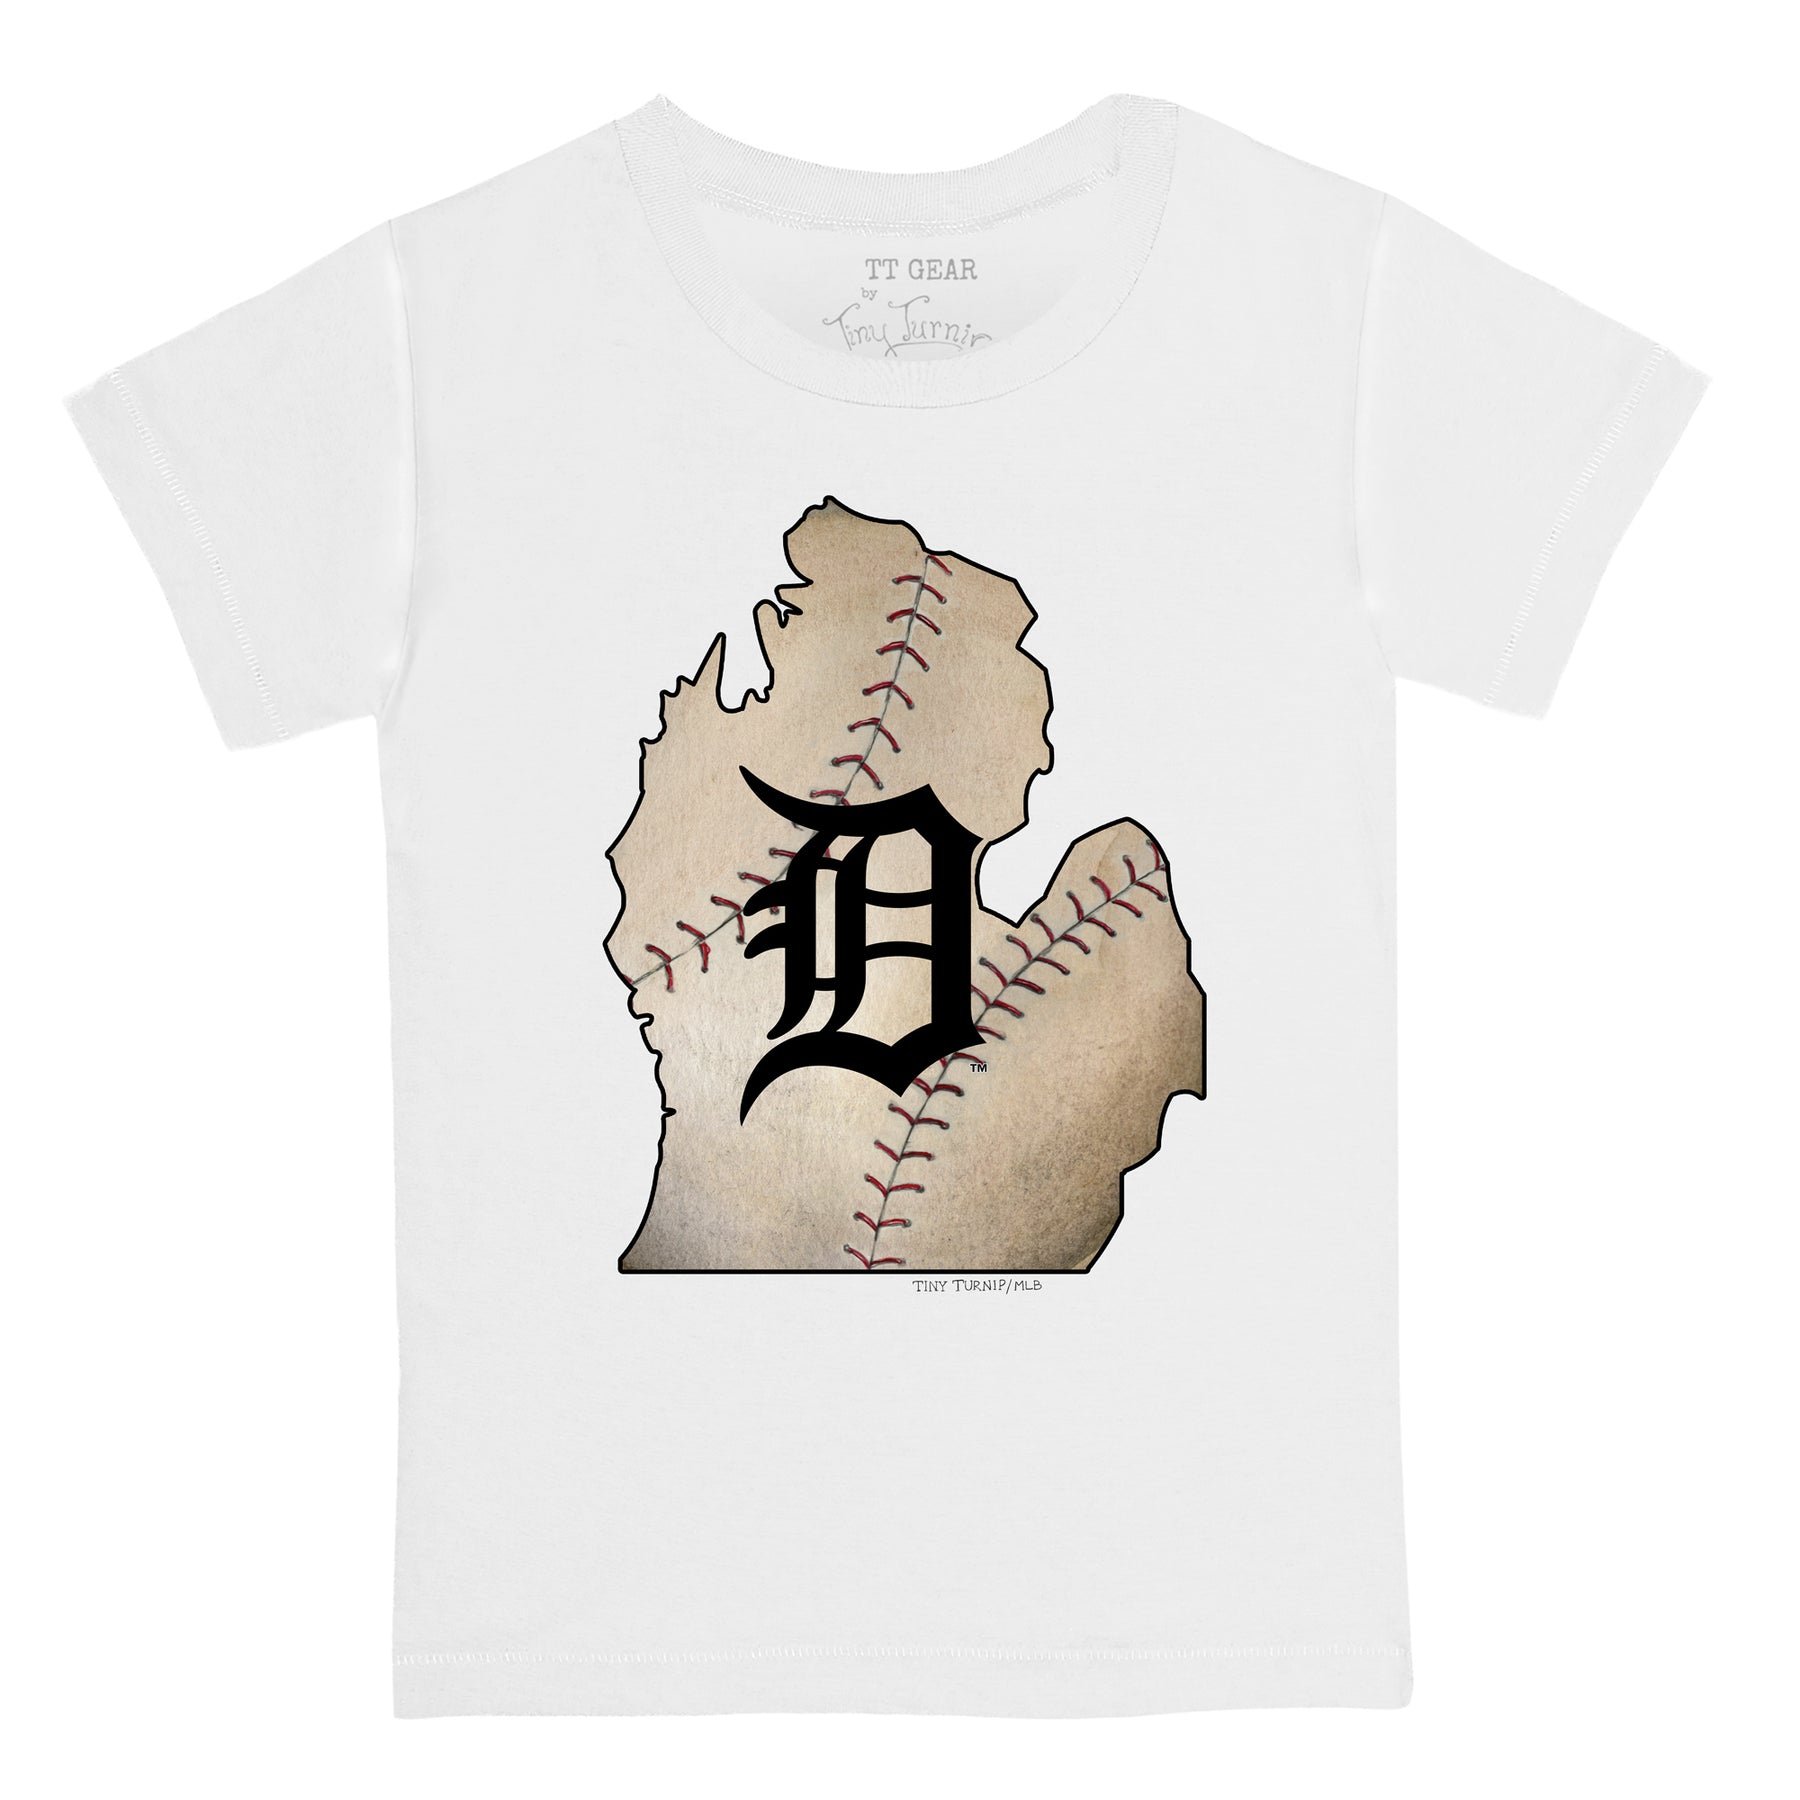 MLB Detroit Tigers Girls' Crew Neck T-Shirt - XS